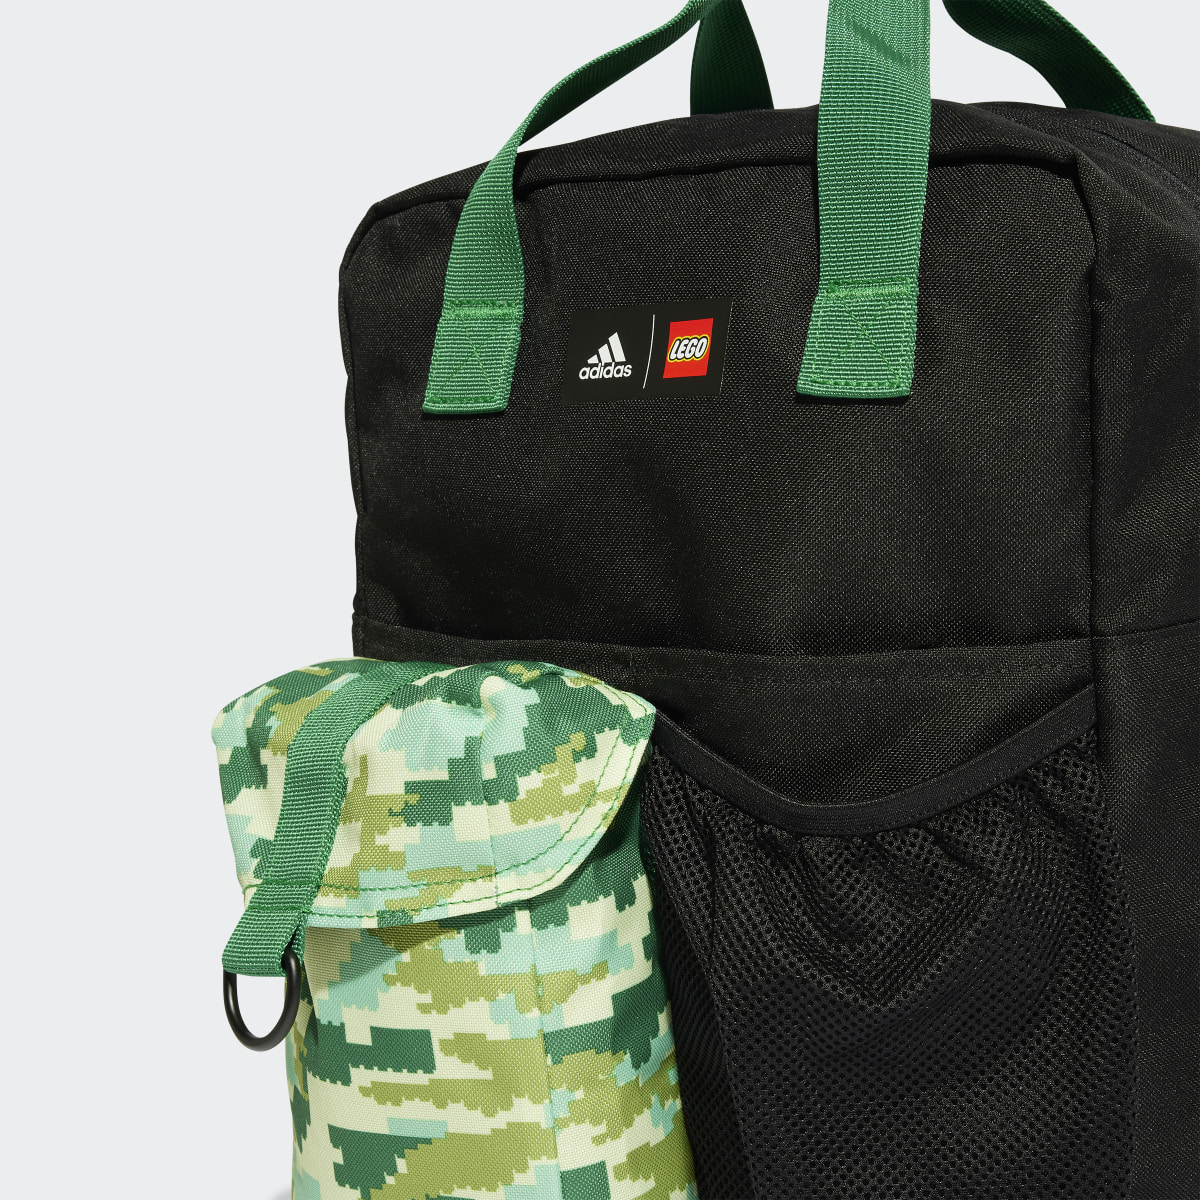 Adidas x LEGO® Multi Play Backpack. 7